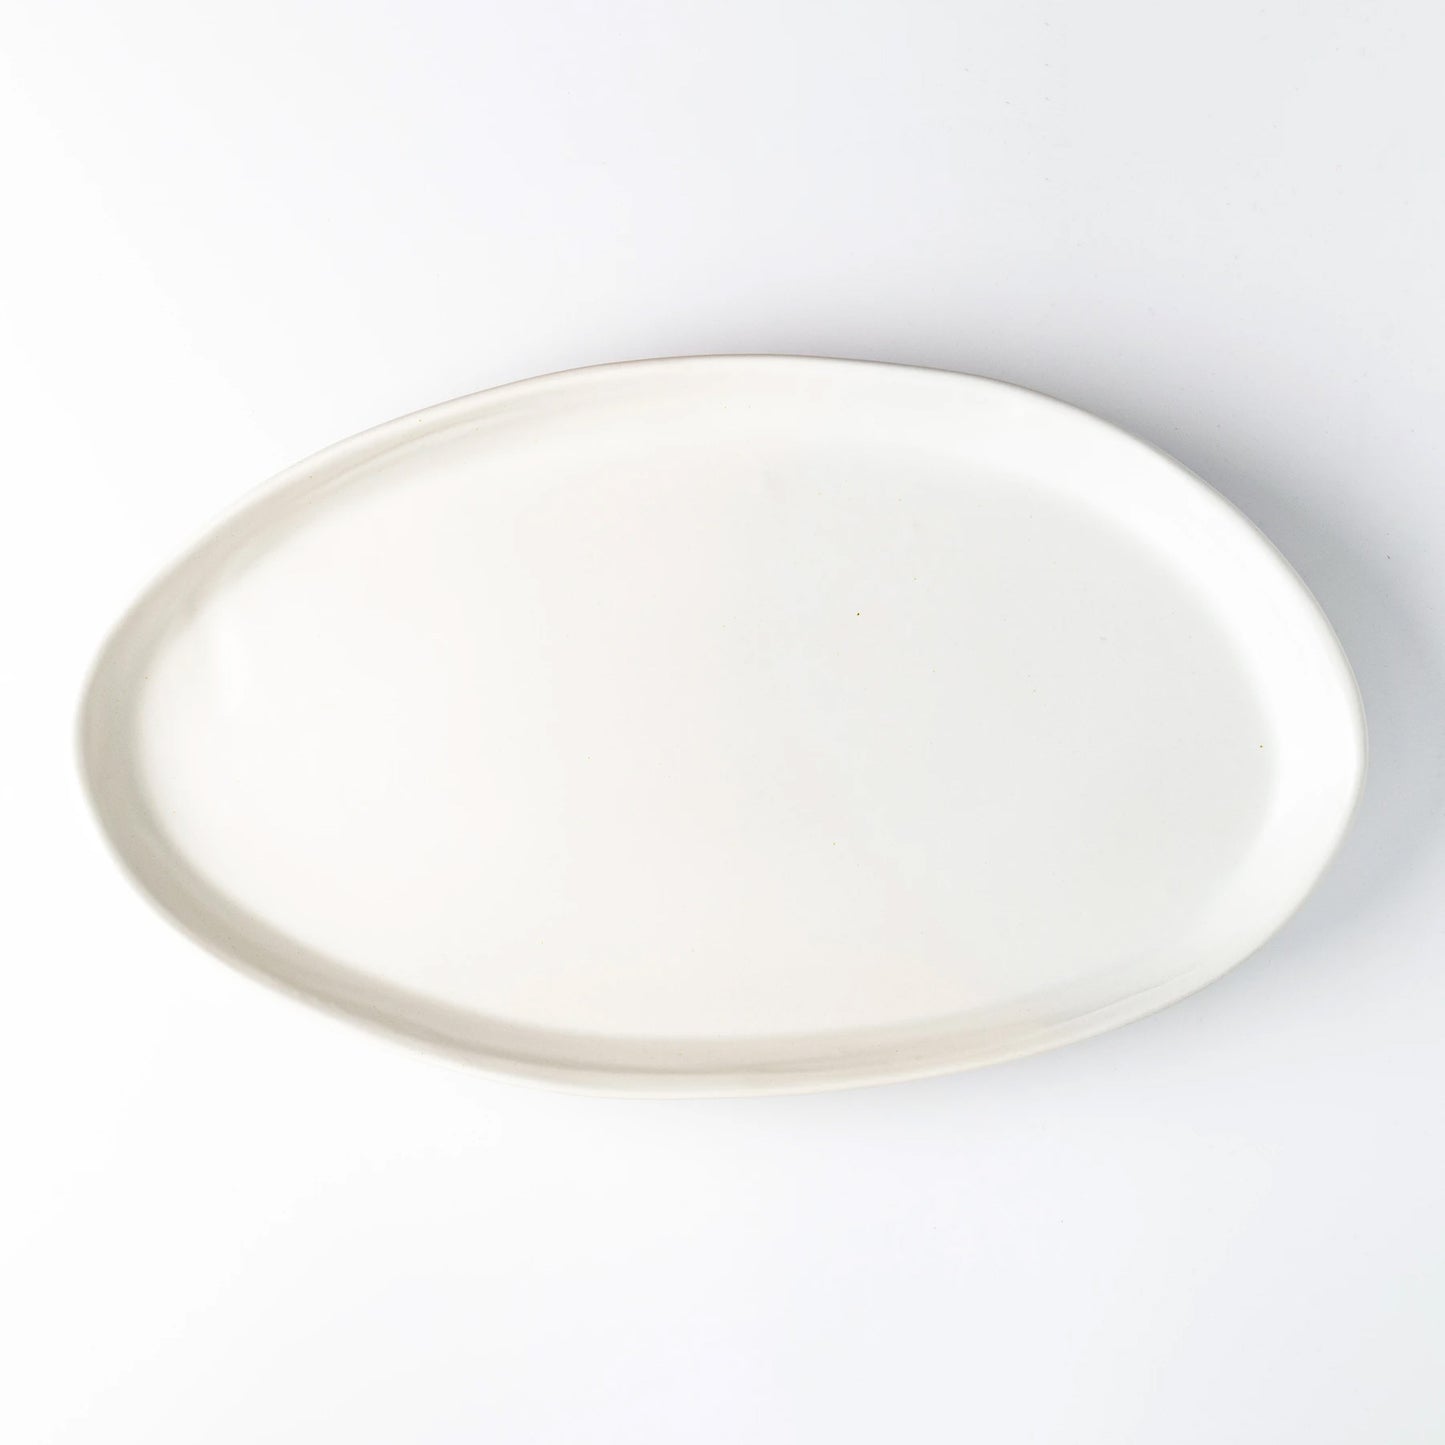 18-Inch Oval Platter